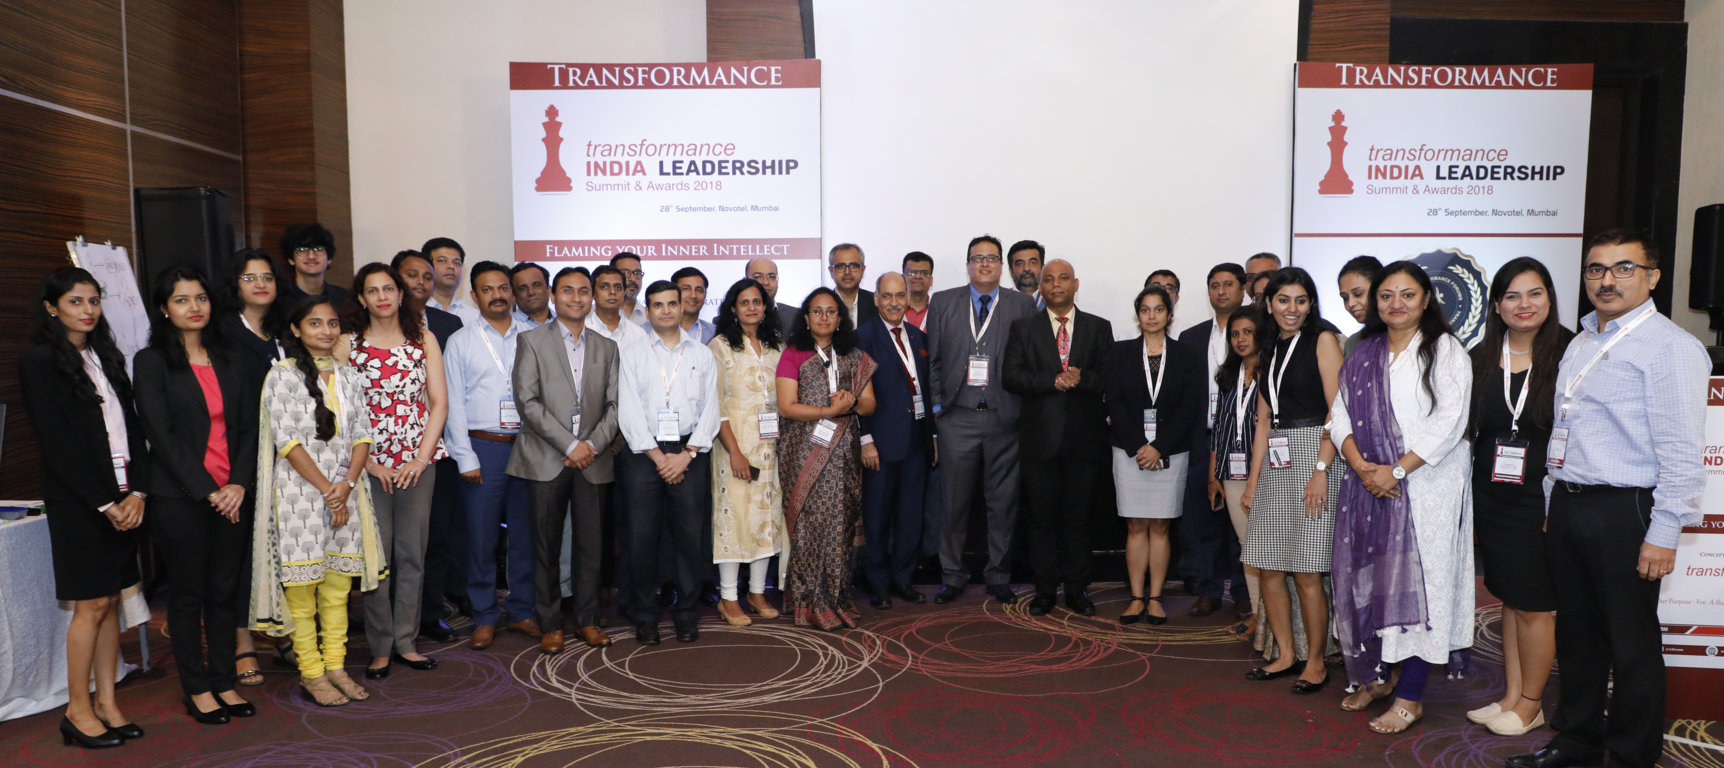 Transformance India Leadership Summit & Awards 2018